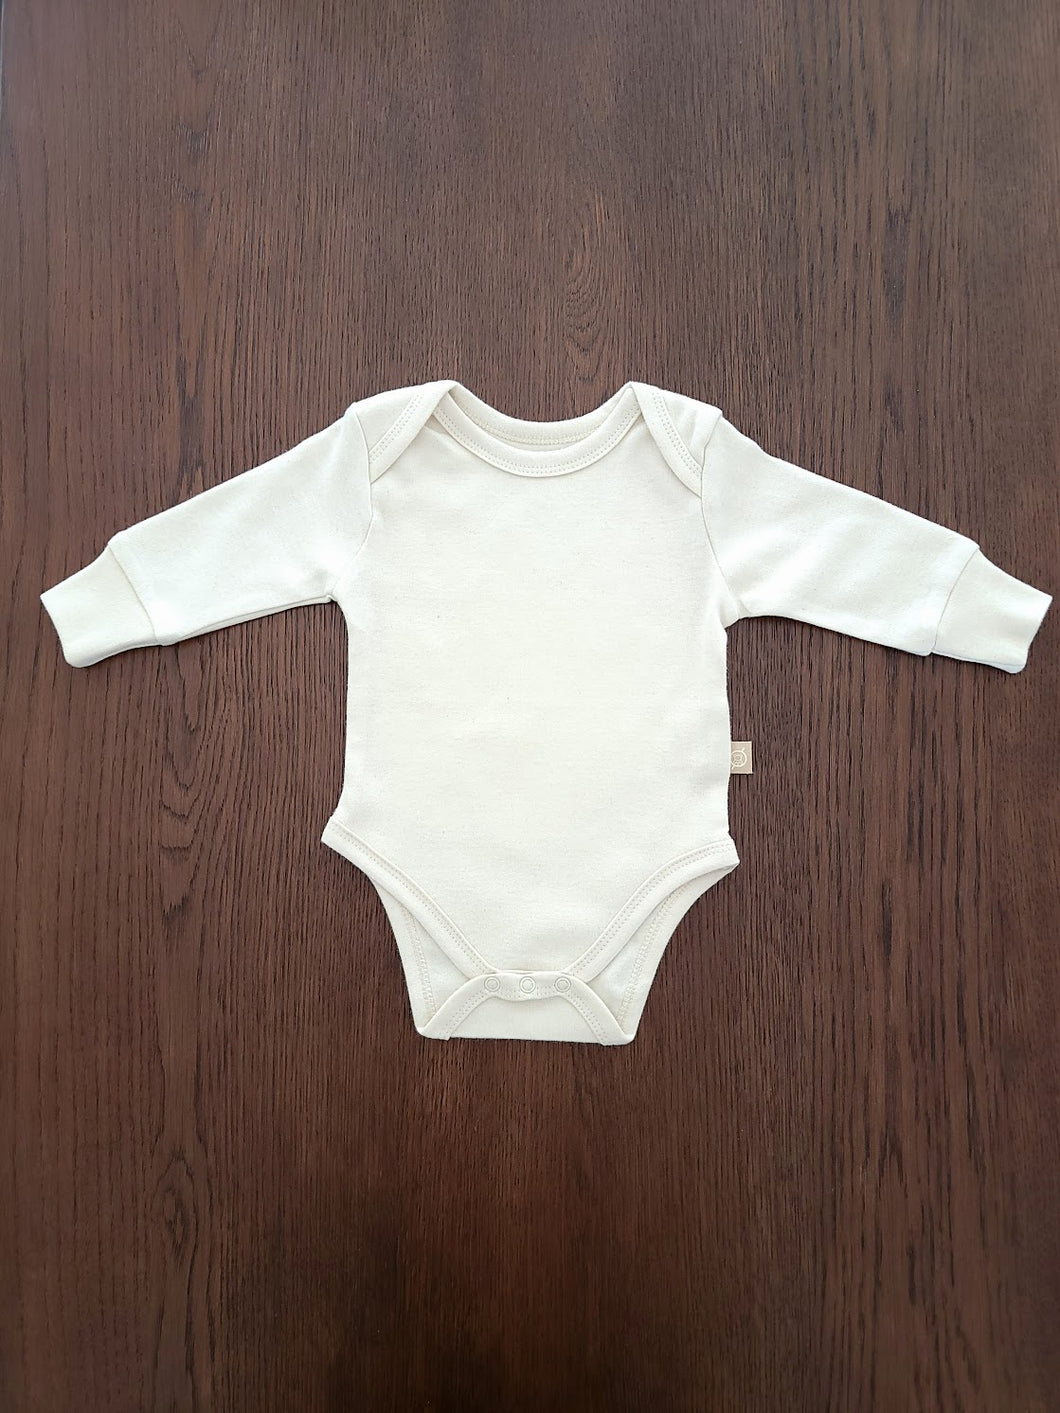 Long Sleeve Baby Bodysuit: Undyed